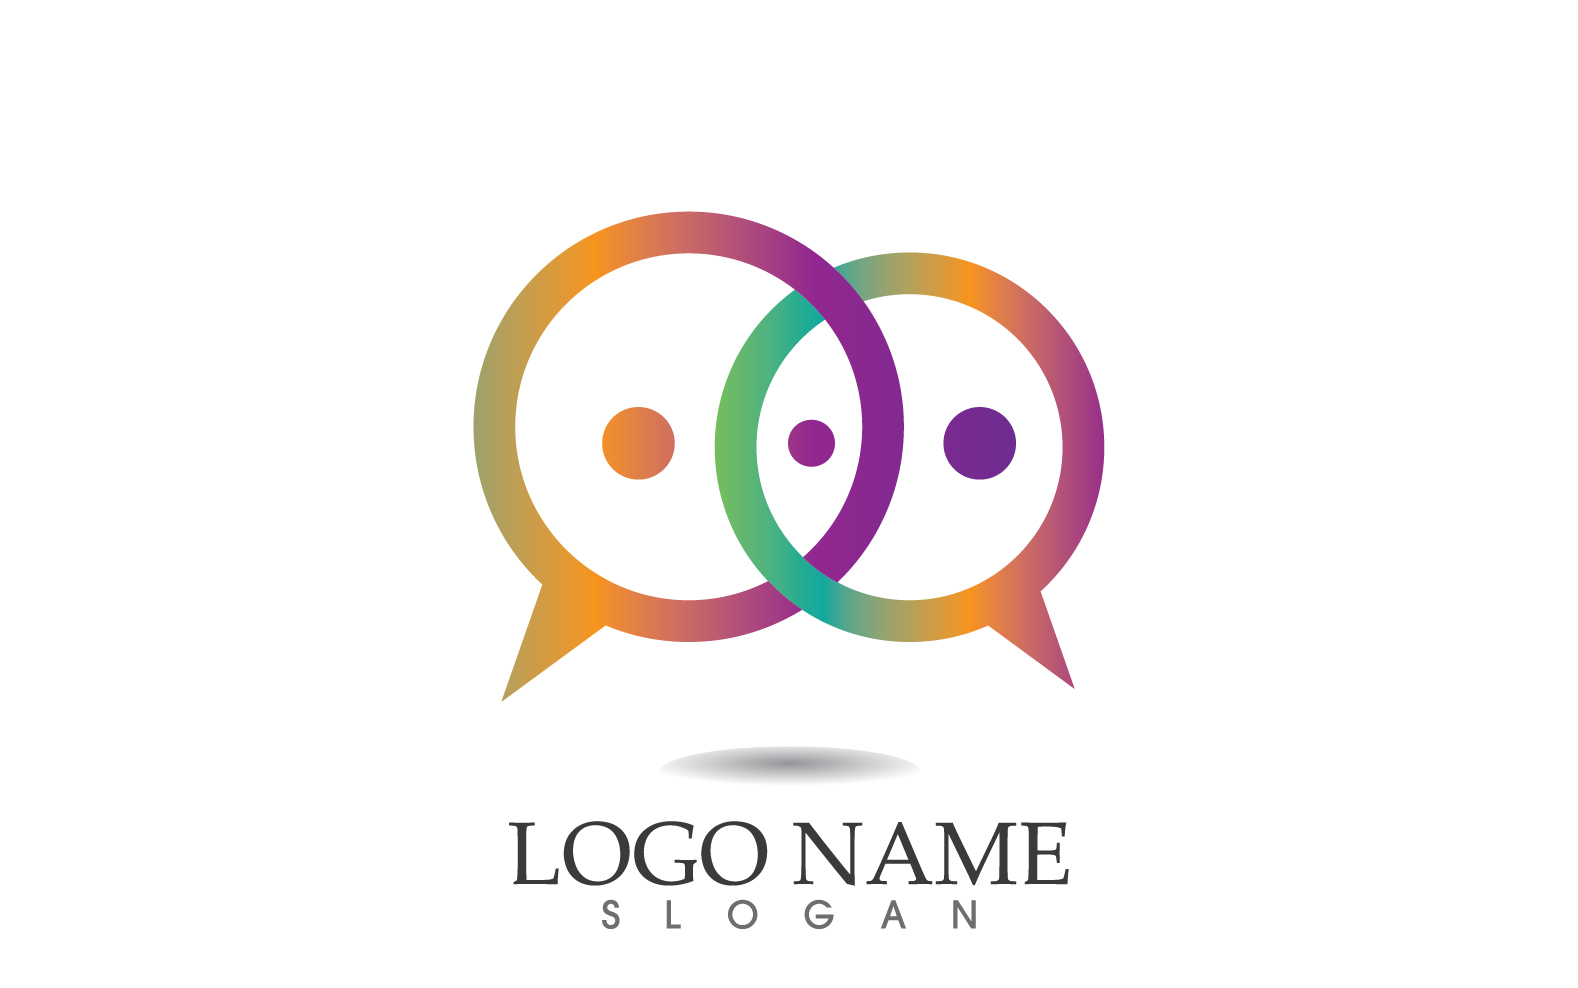 Bubble chat social account logo vector